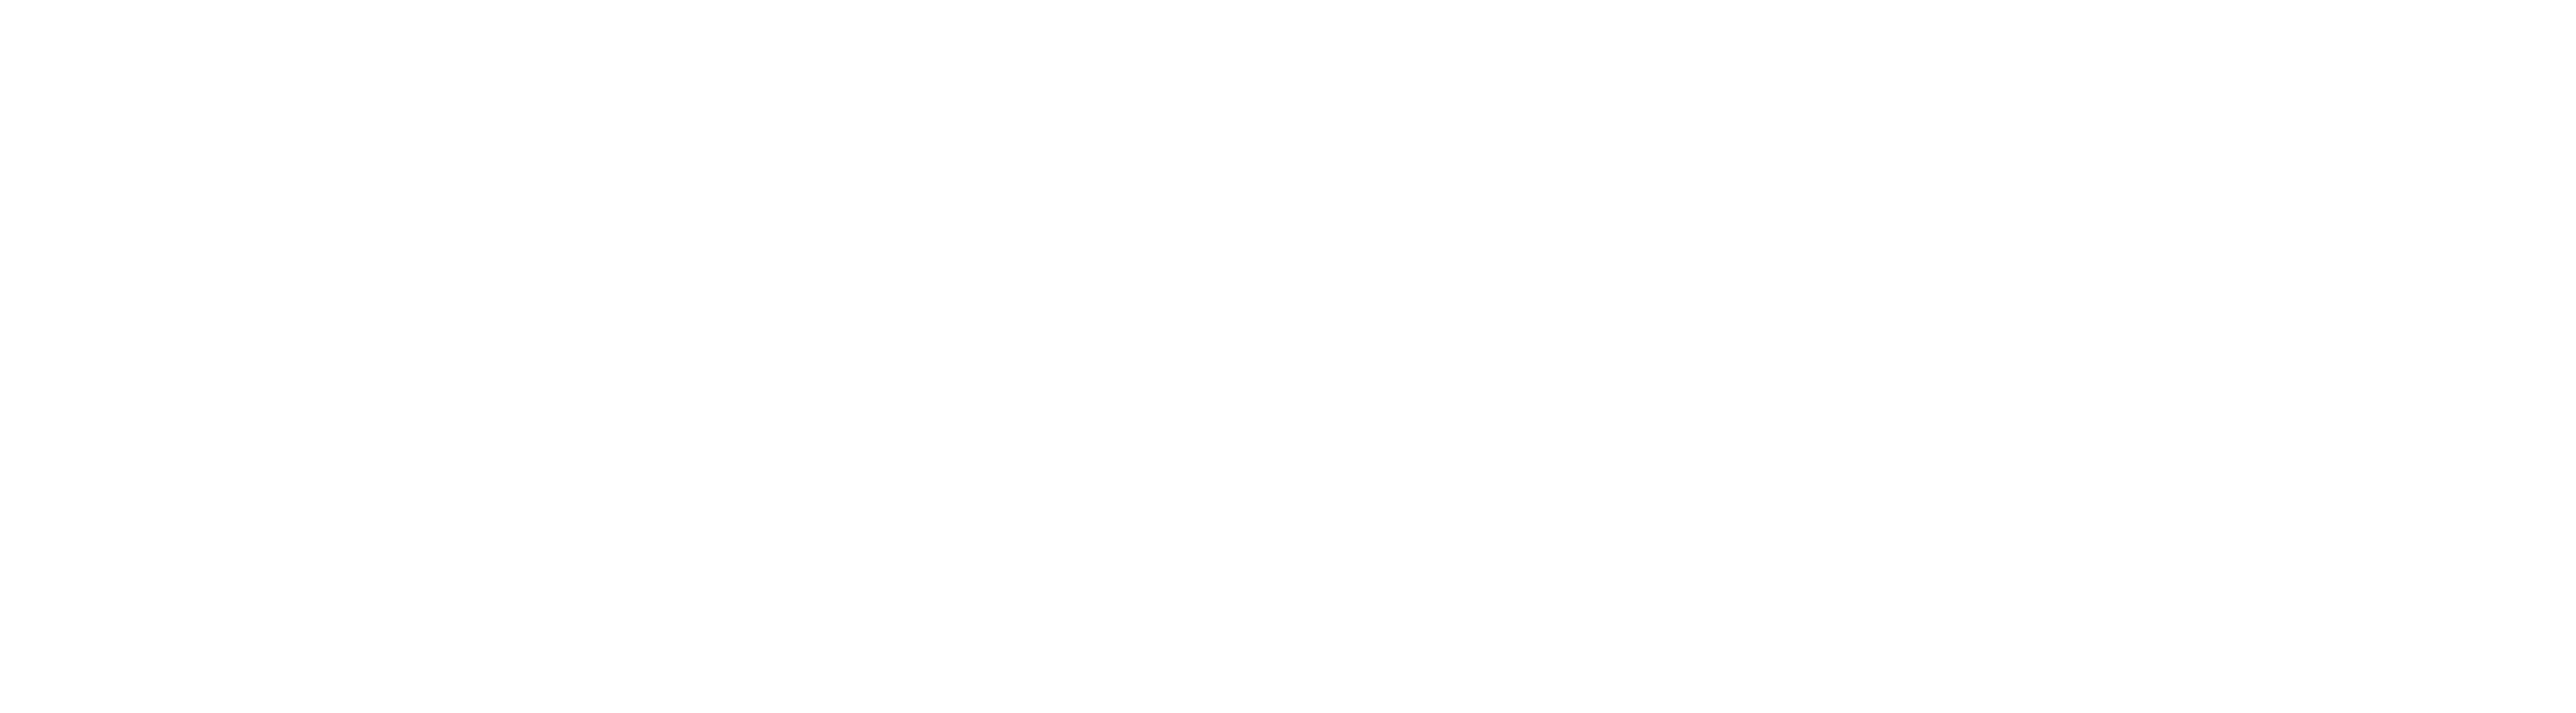 Legito PowerUp 2023 - conference logo